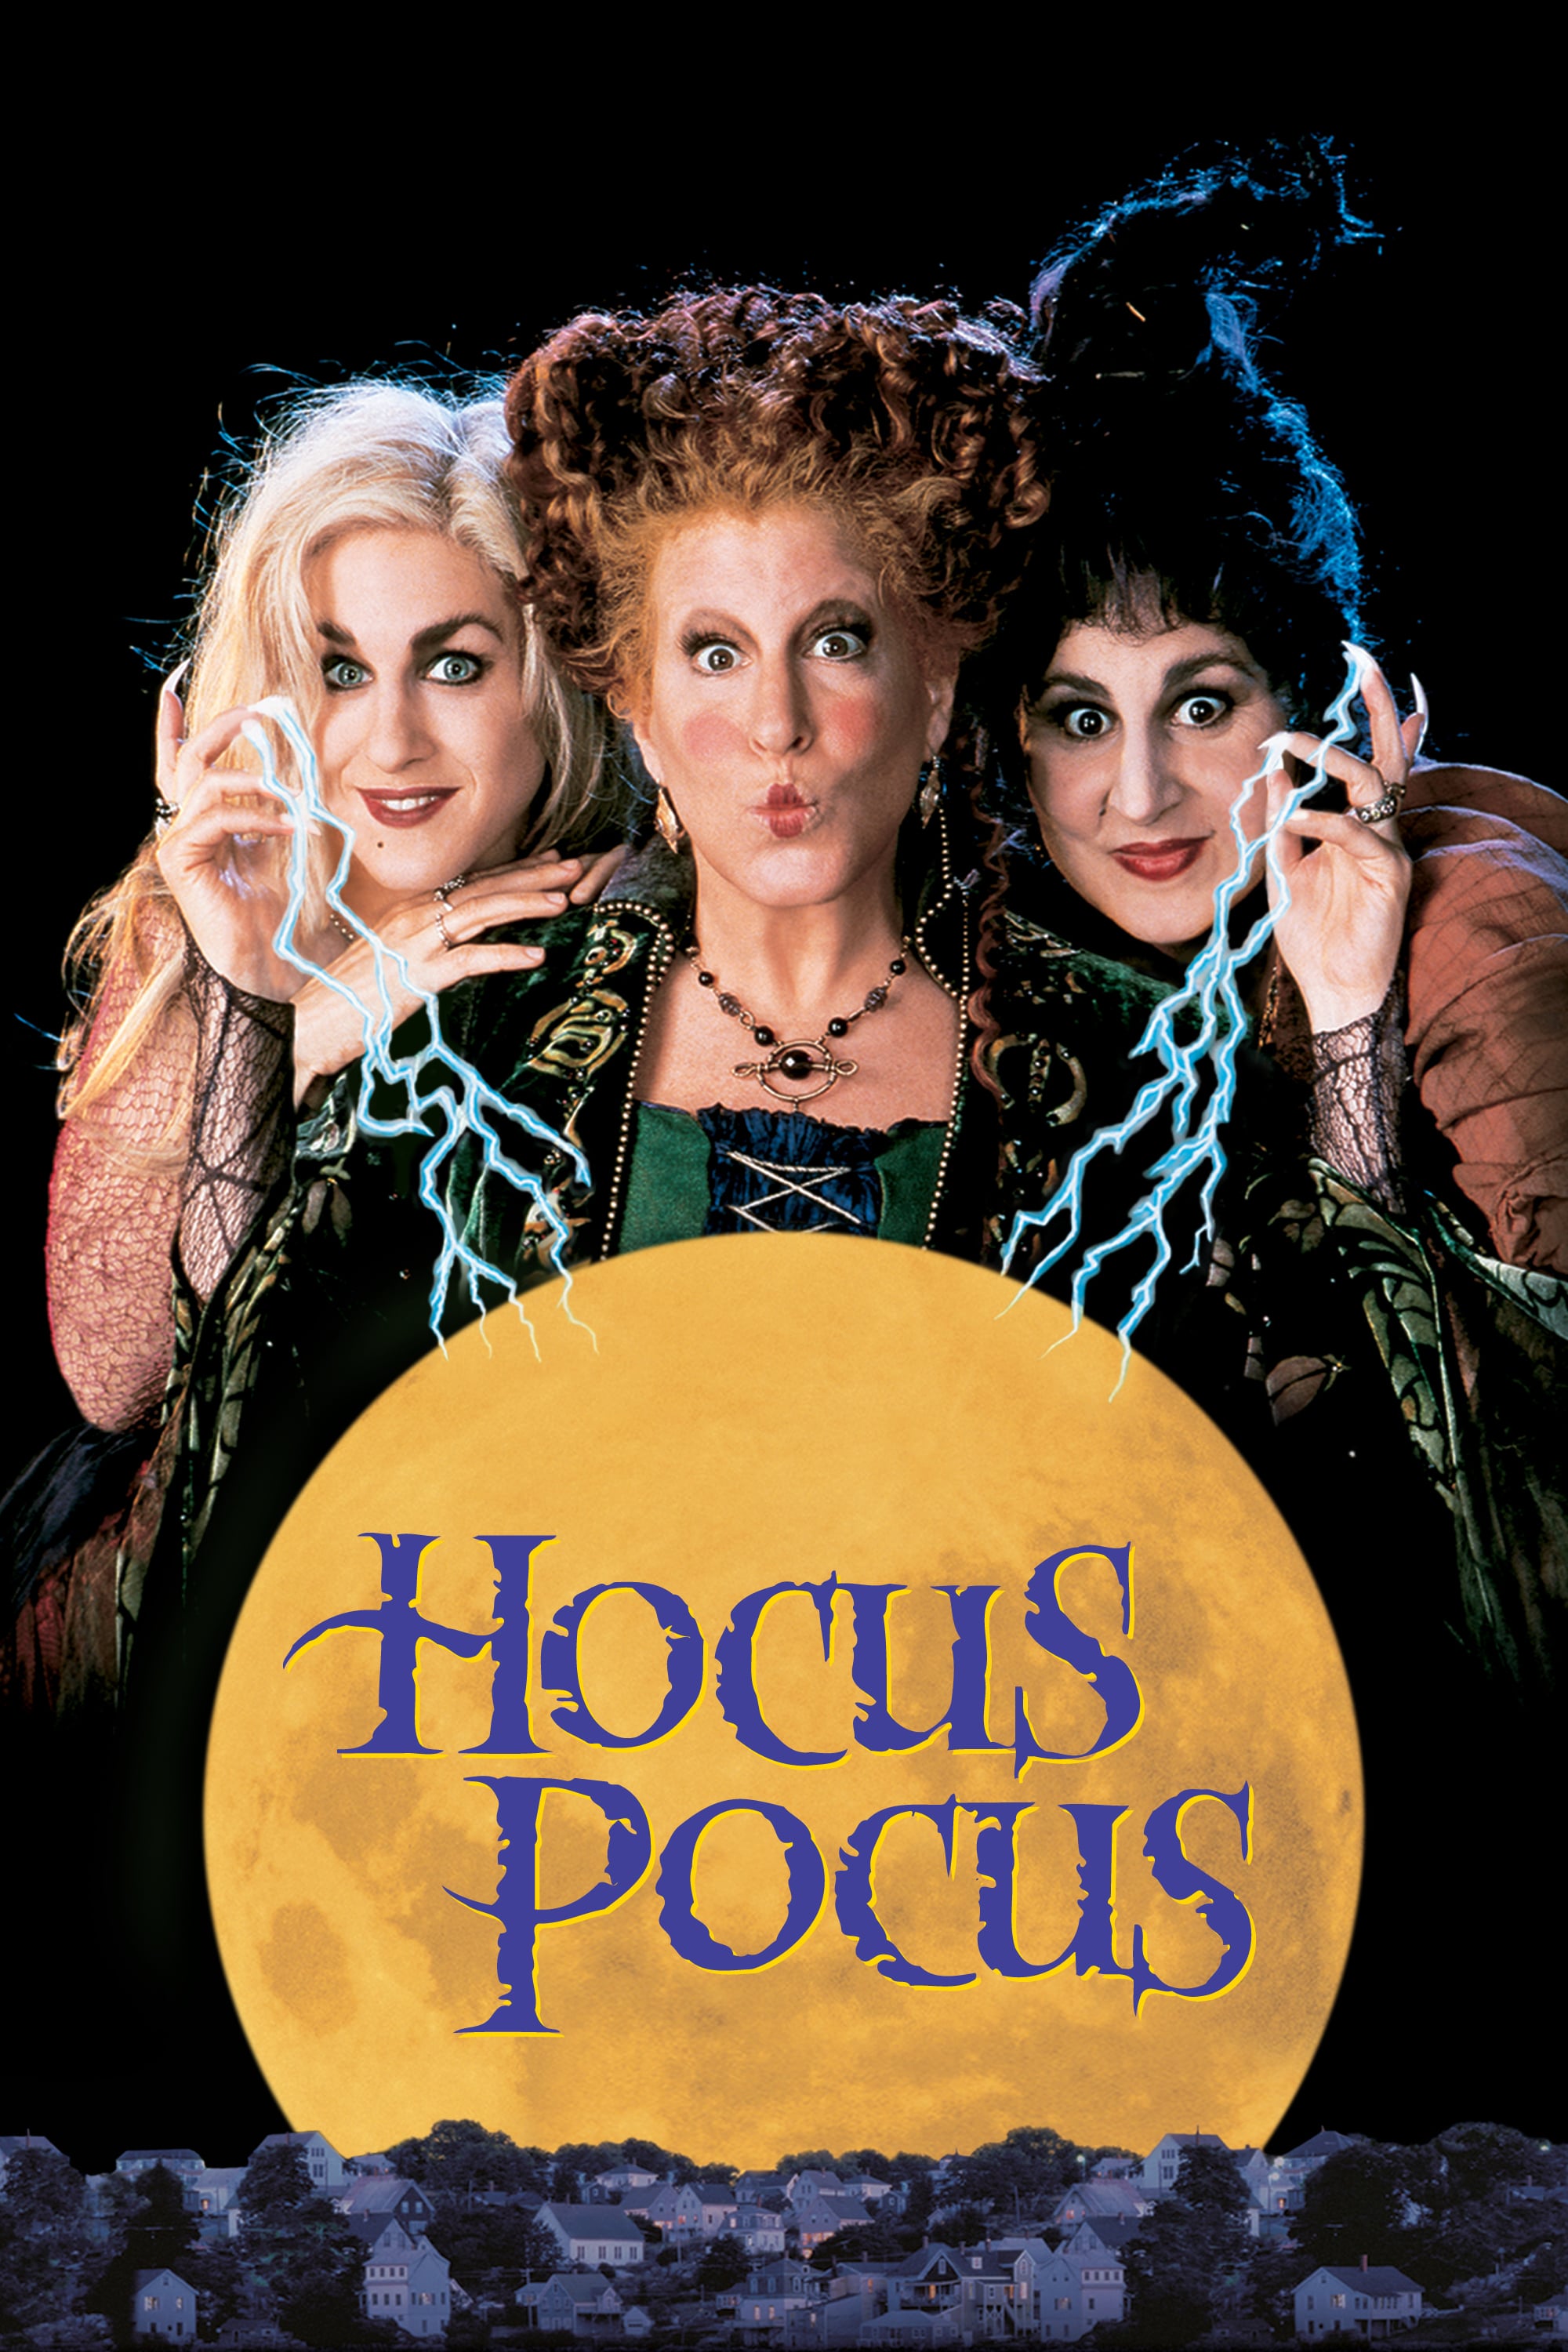 Poster for the movie "Hocus Pocus"